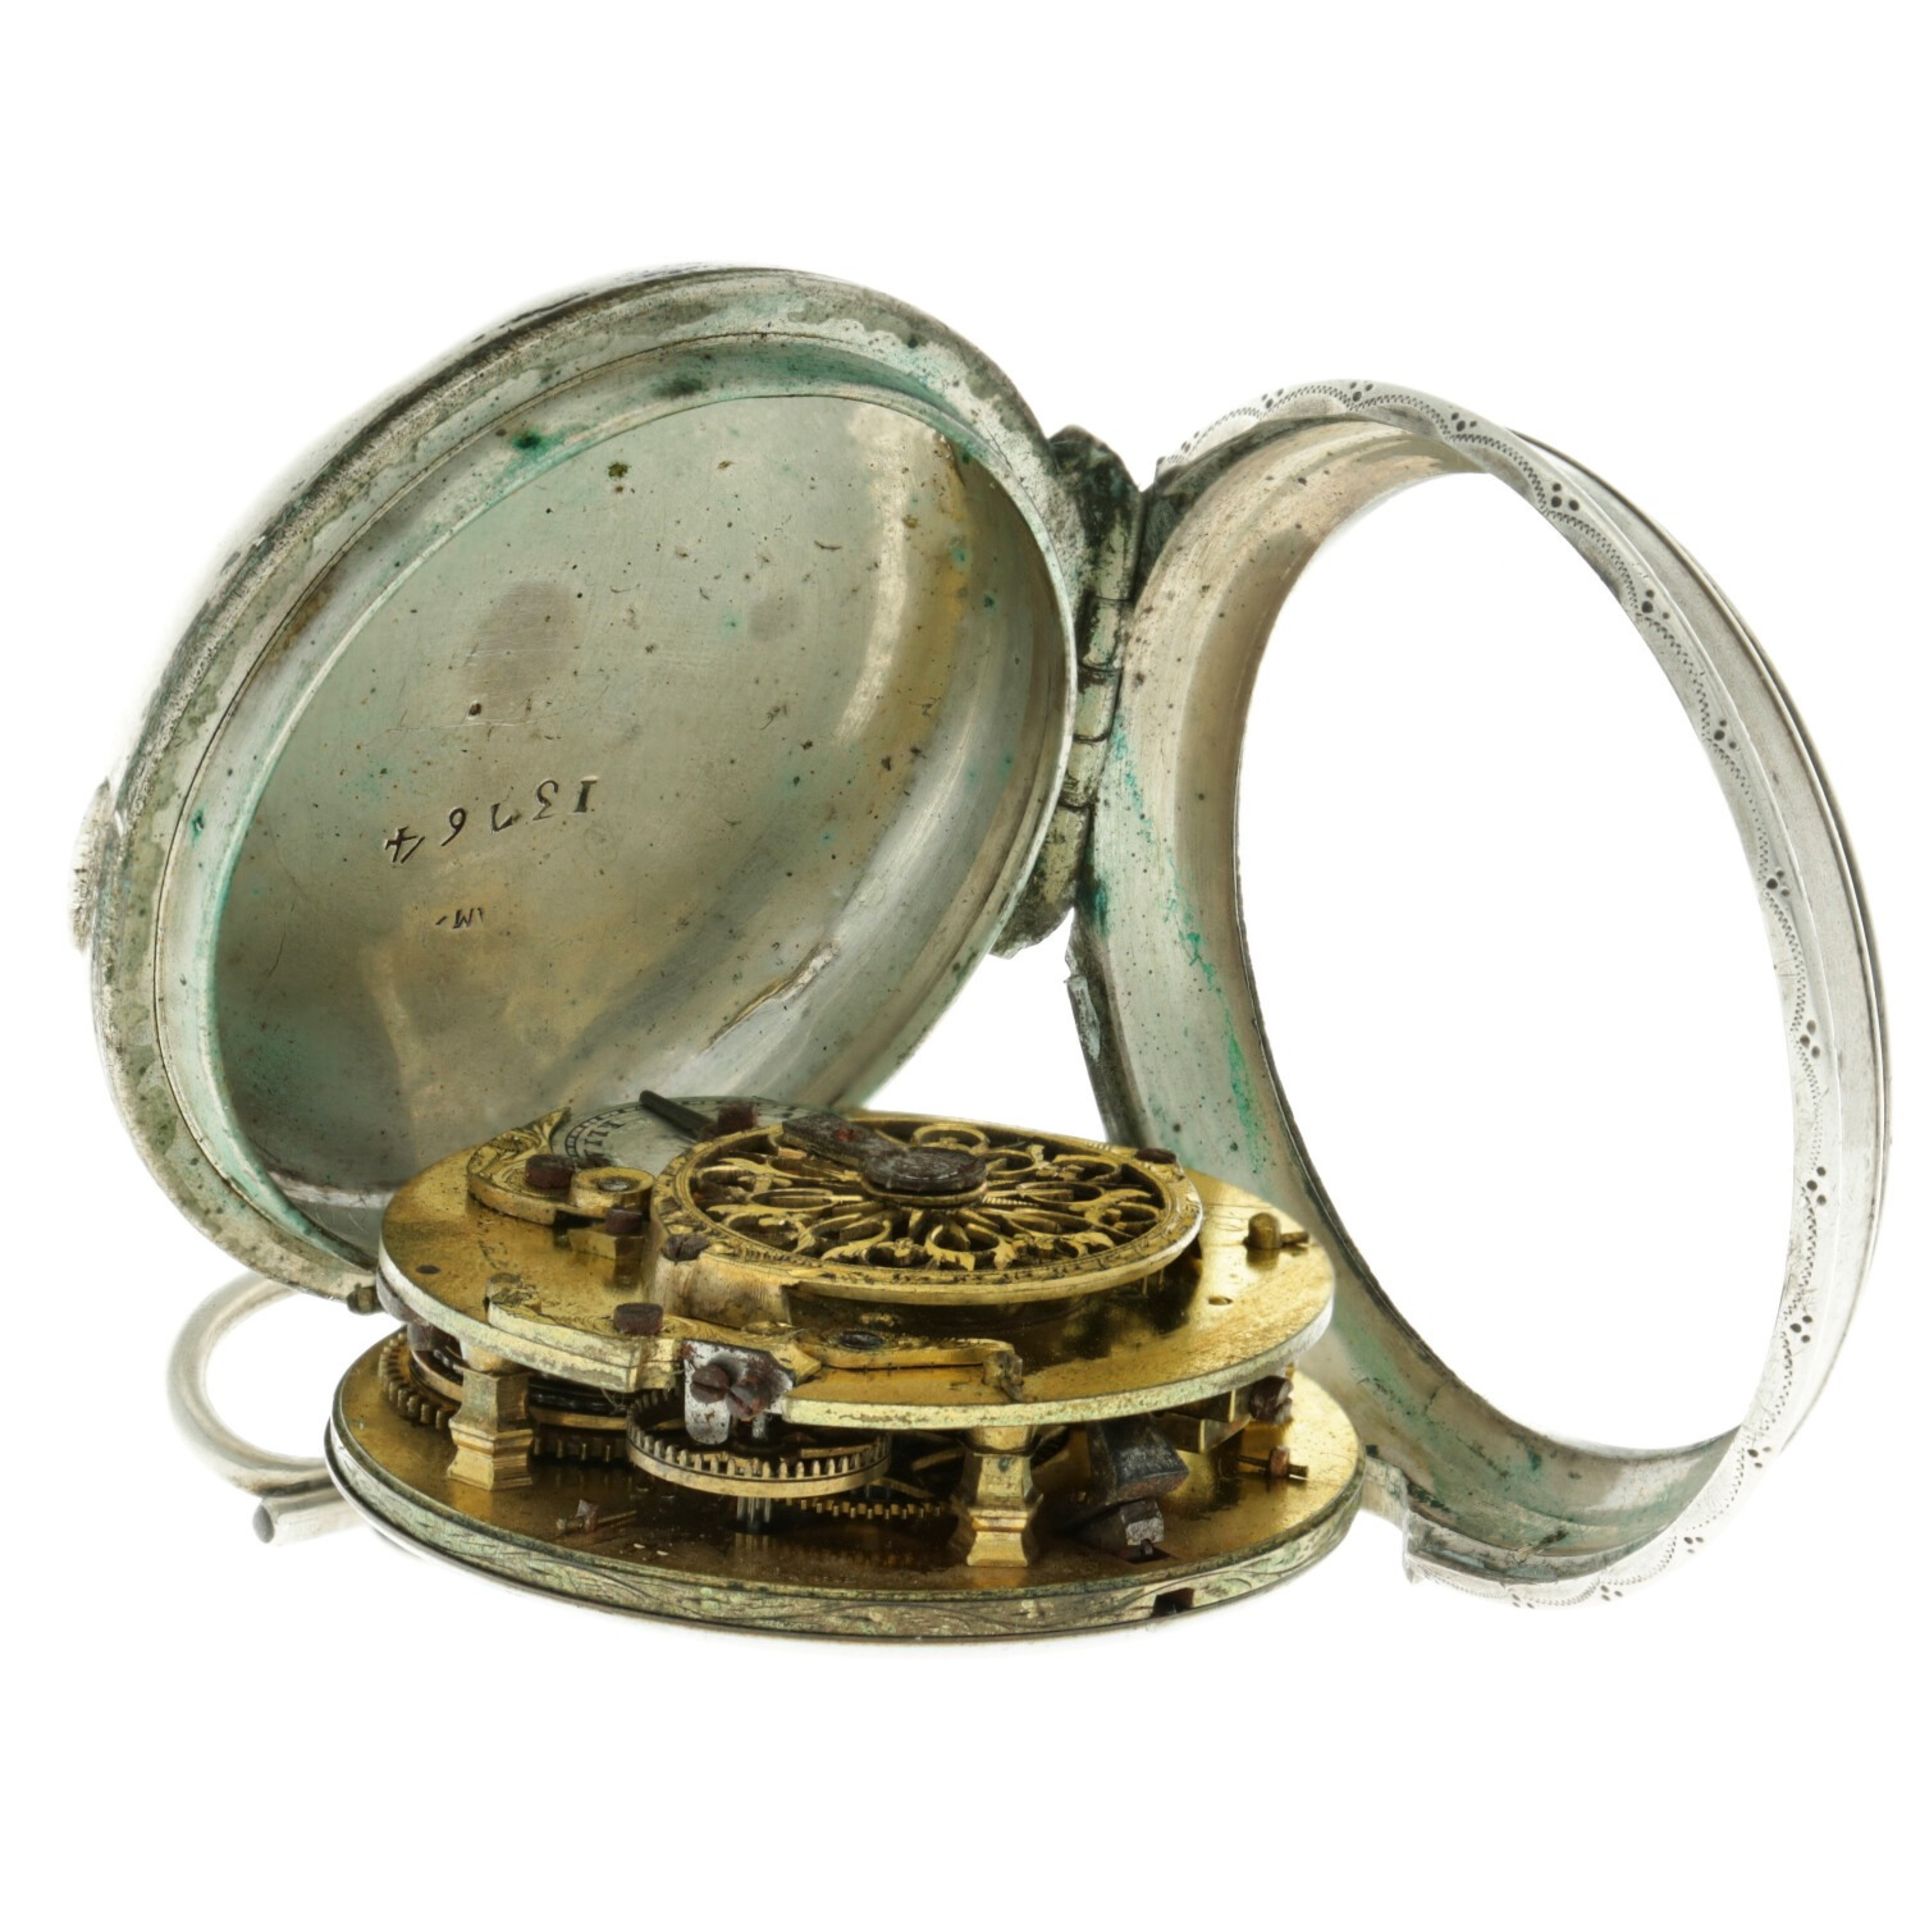 No Reserve - Lambrechts silver (925/1000) Verge Fusee - Men's pocketwatch - approx. 1850 Hasselt, Th - Bild 3 aus 4